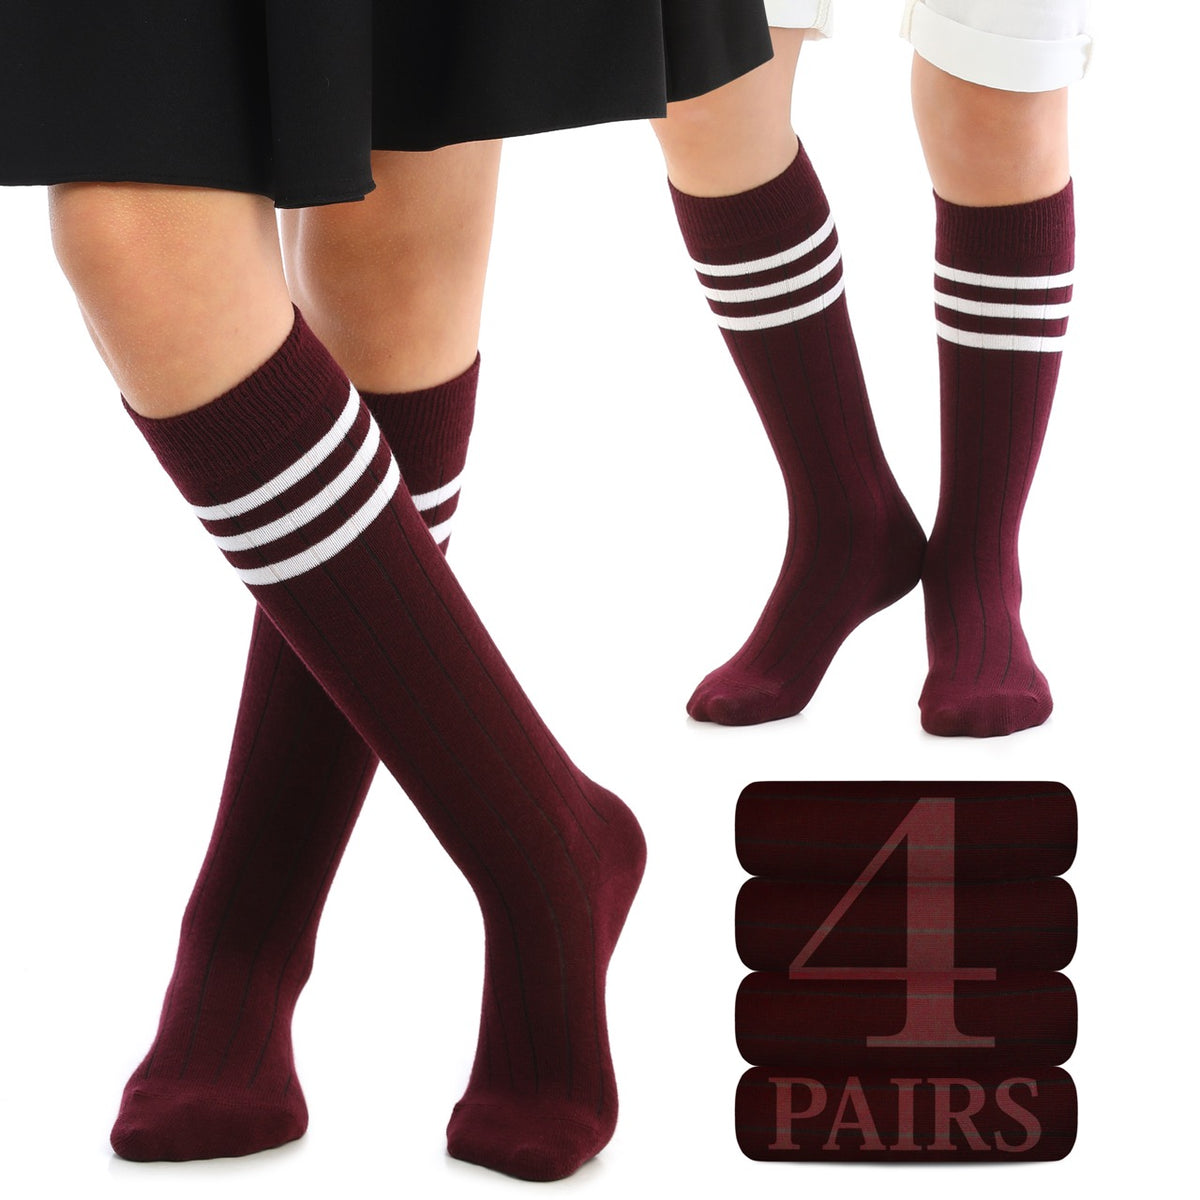 Striped Cotton Kids' Knee-High Dress Socks, 4 Pairs